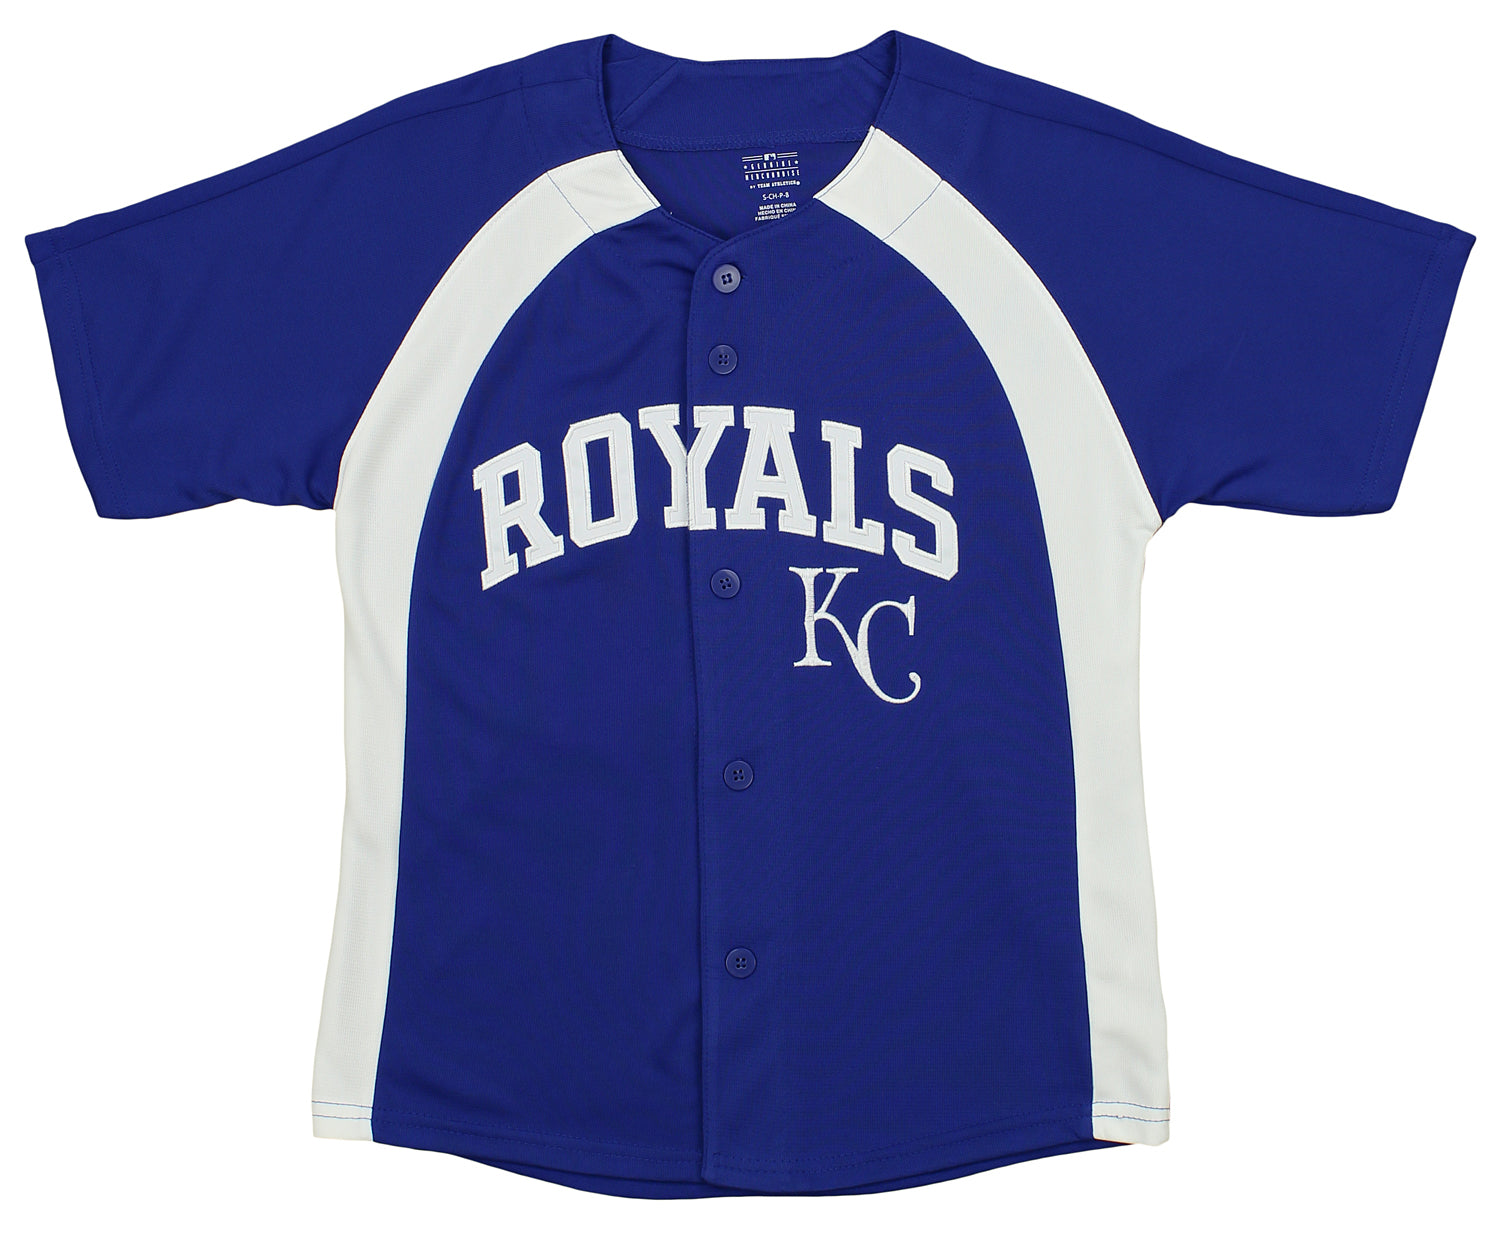 royals blue jersey